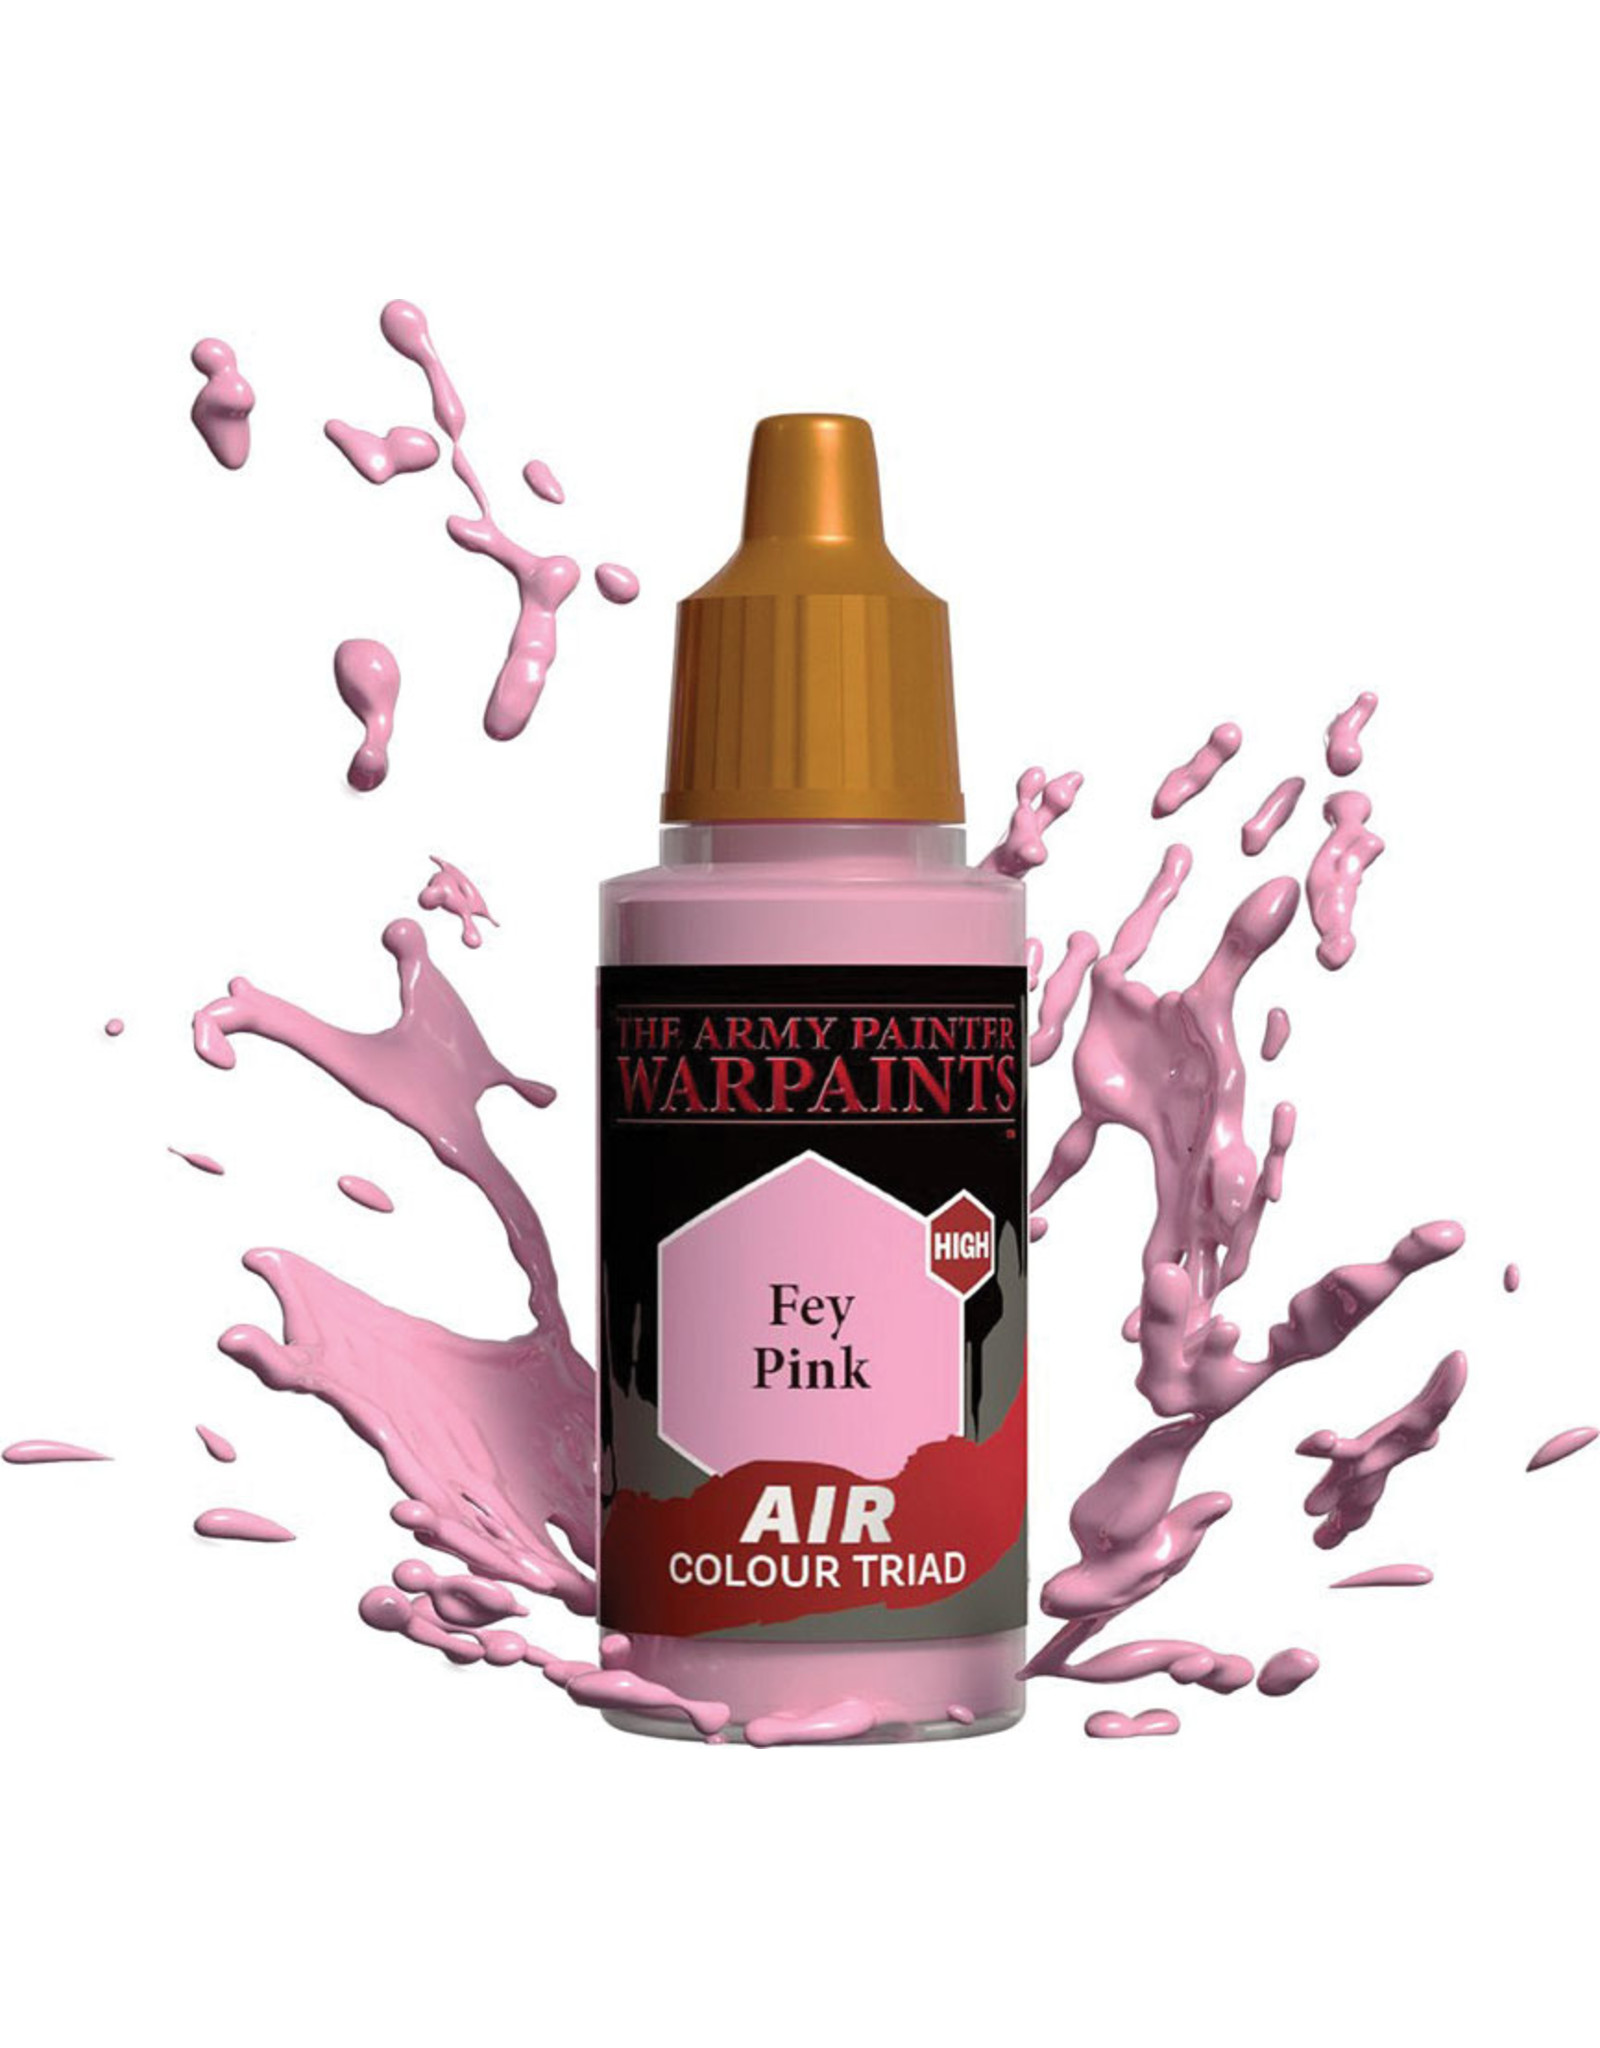 Army Painter Warpaint Air: Fey Pink, 18ml.